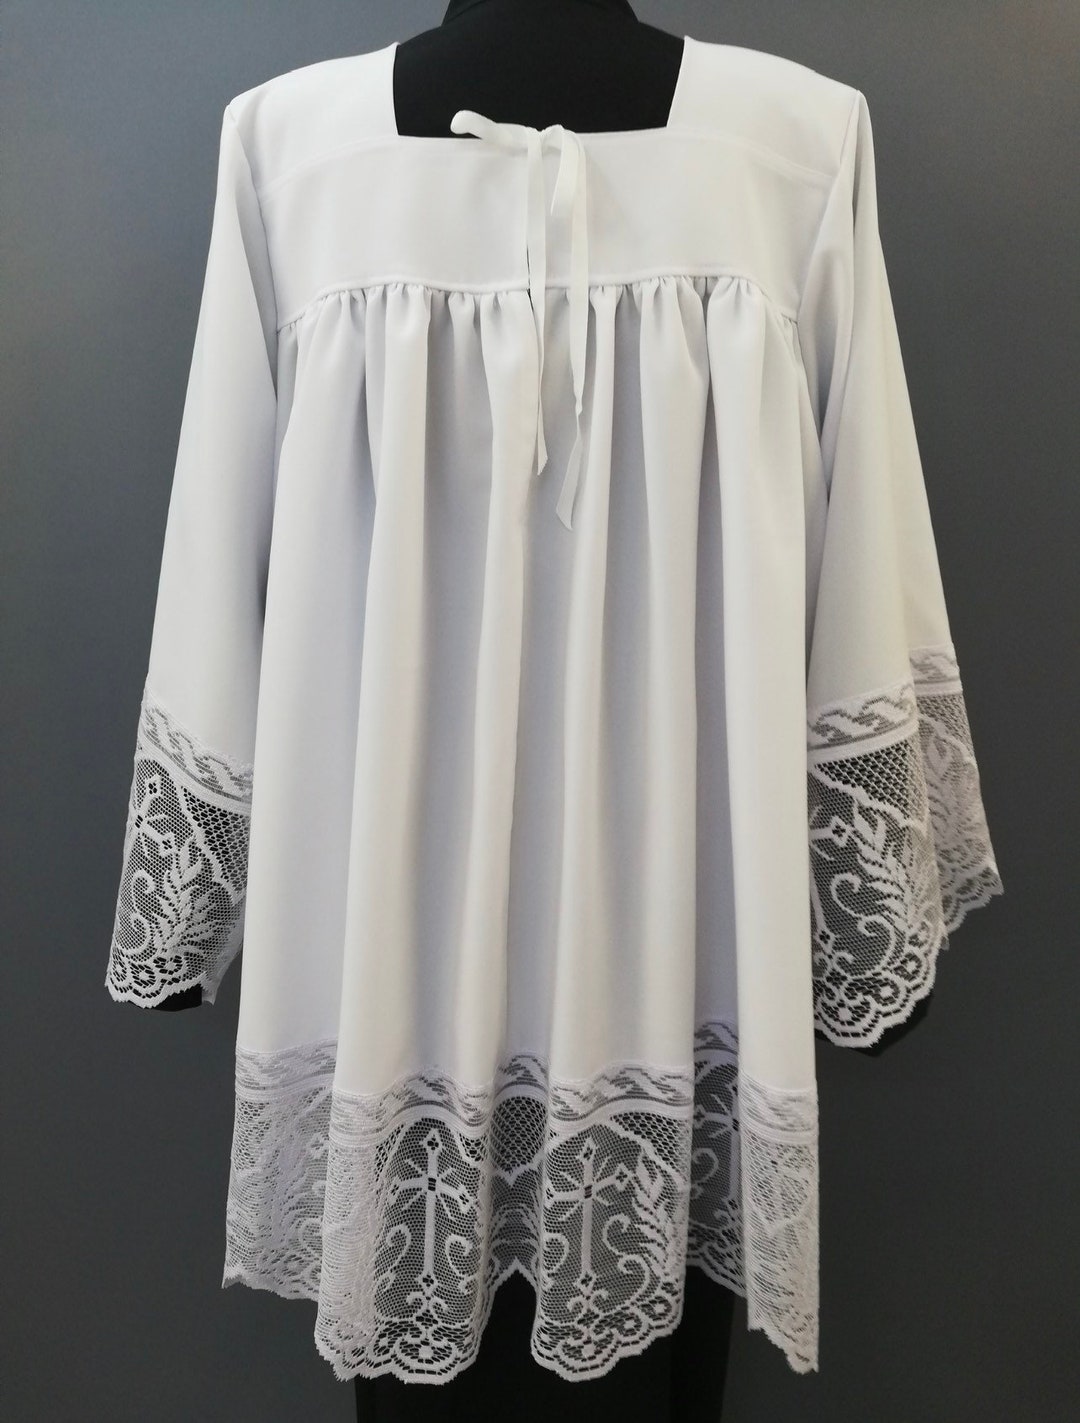 Roman Style Lace Surplice Chasuble Vestments - Etsy